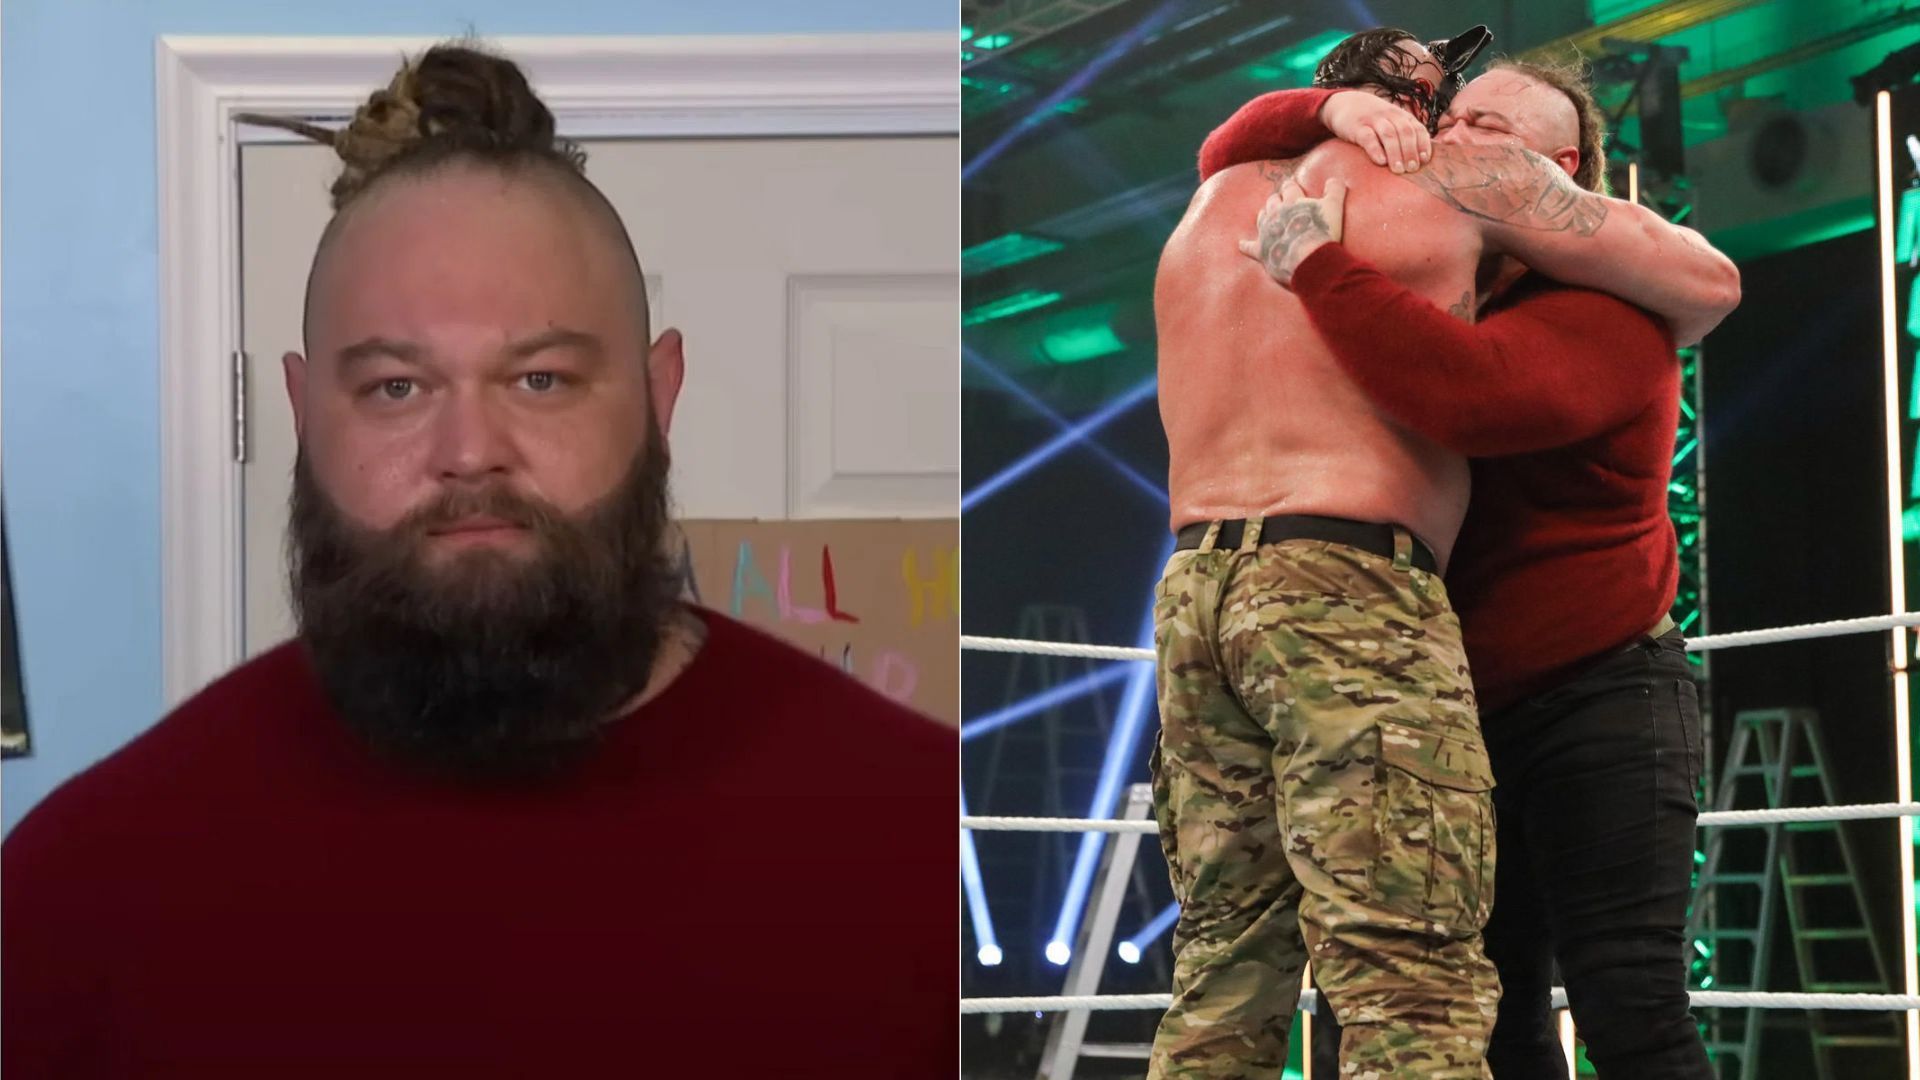 Braun Strowman and Bray Wyatt were close friends in real life